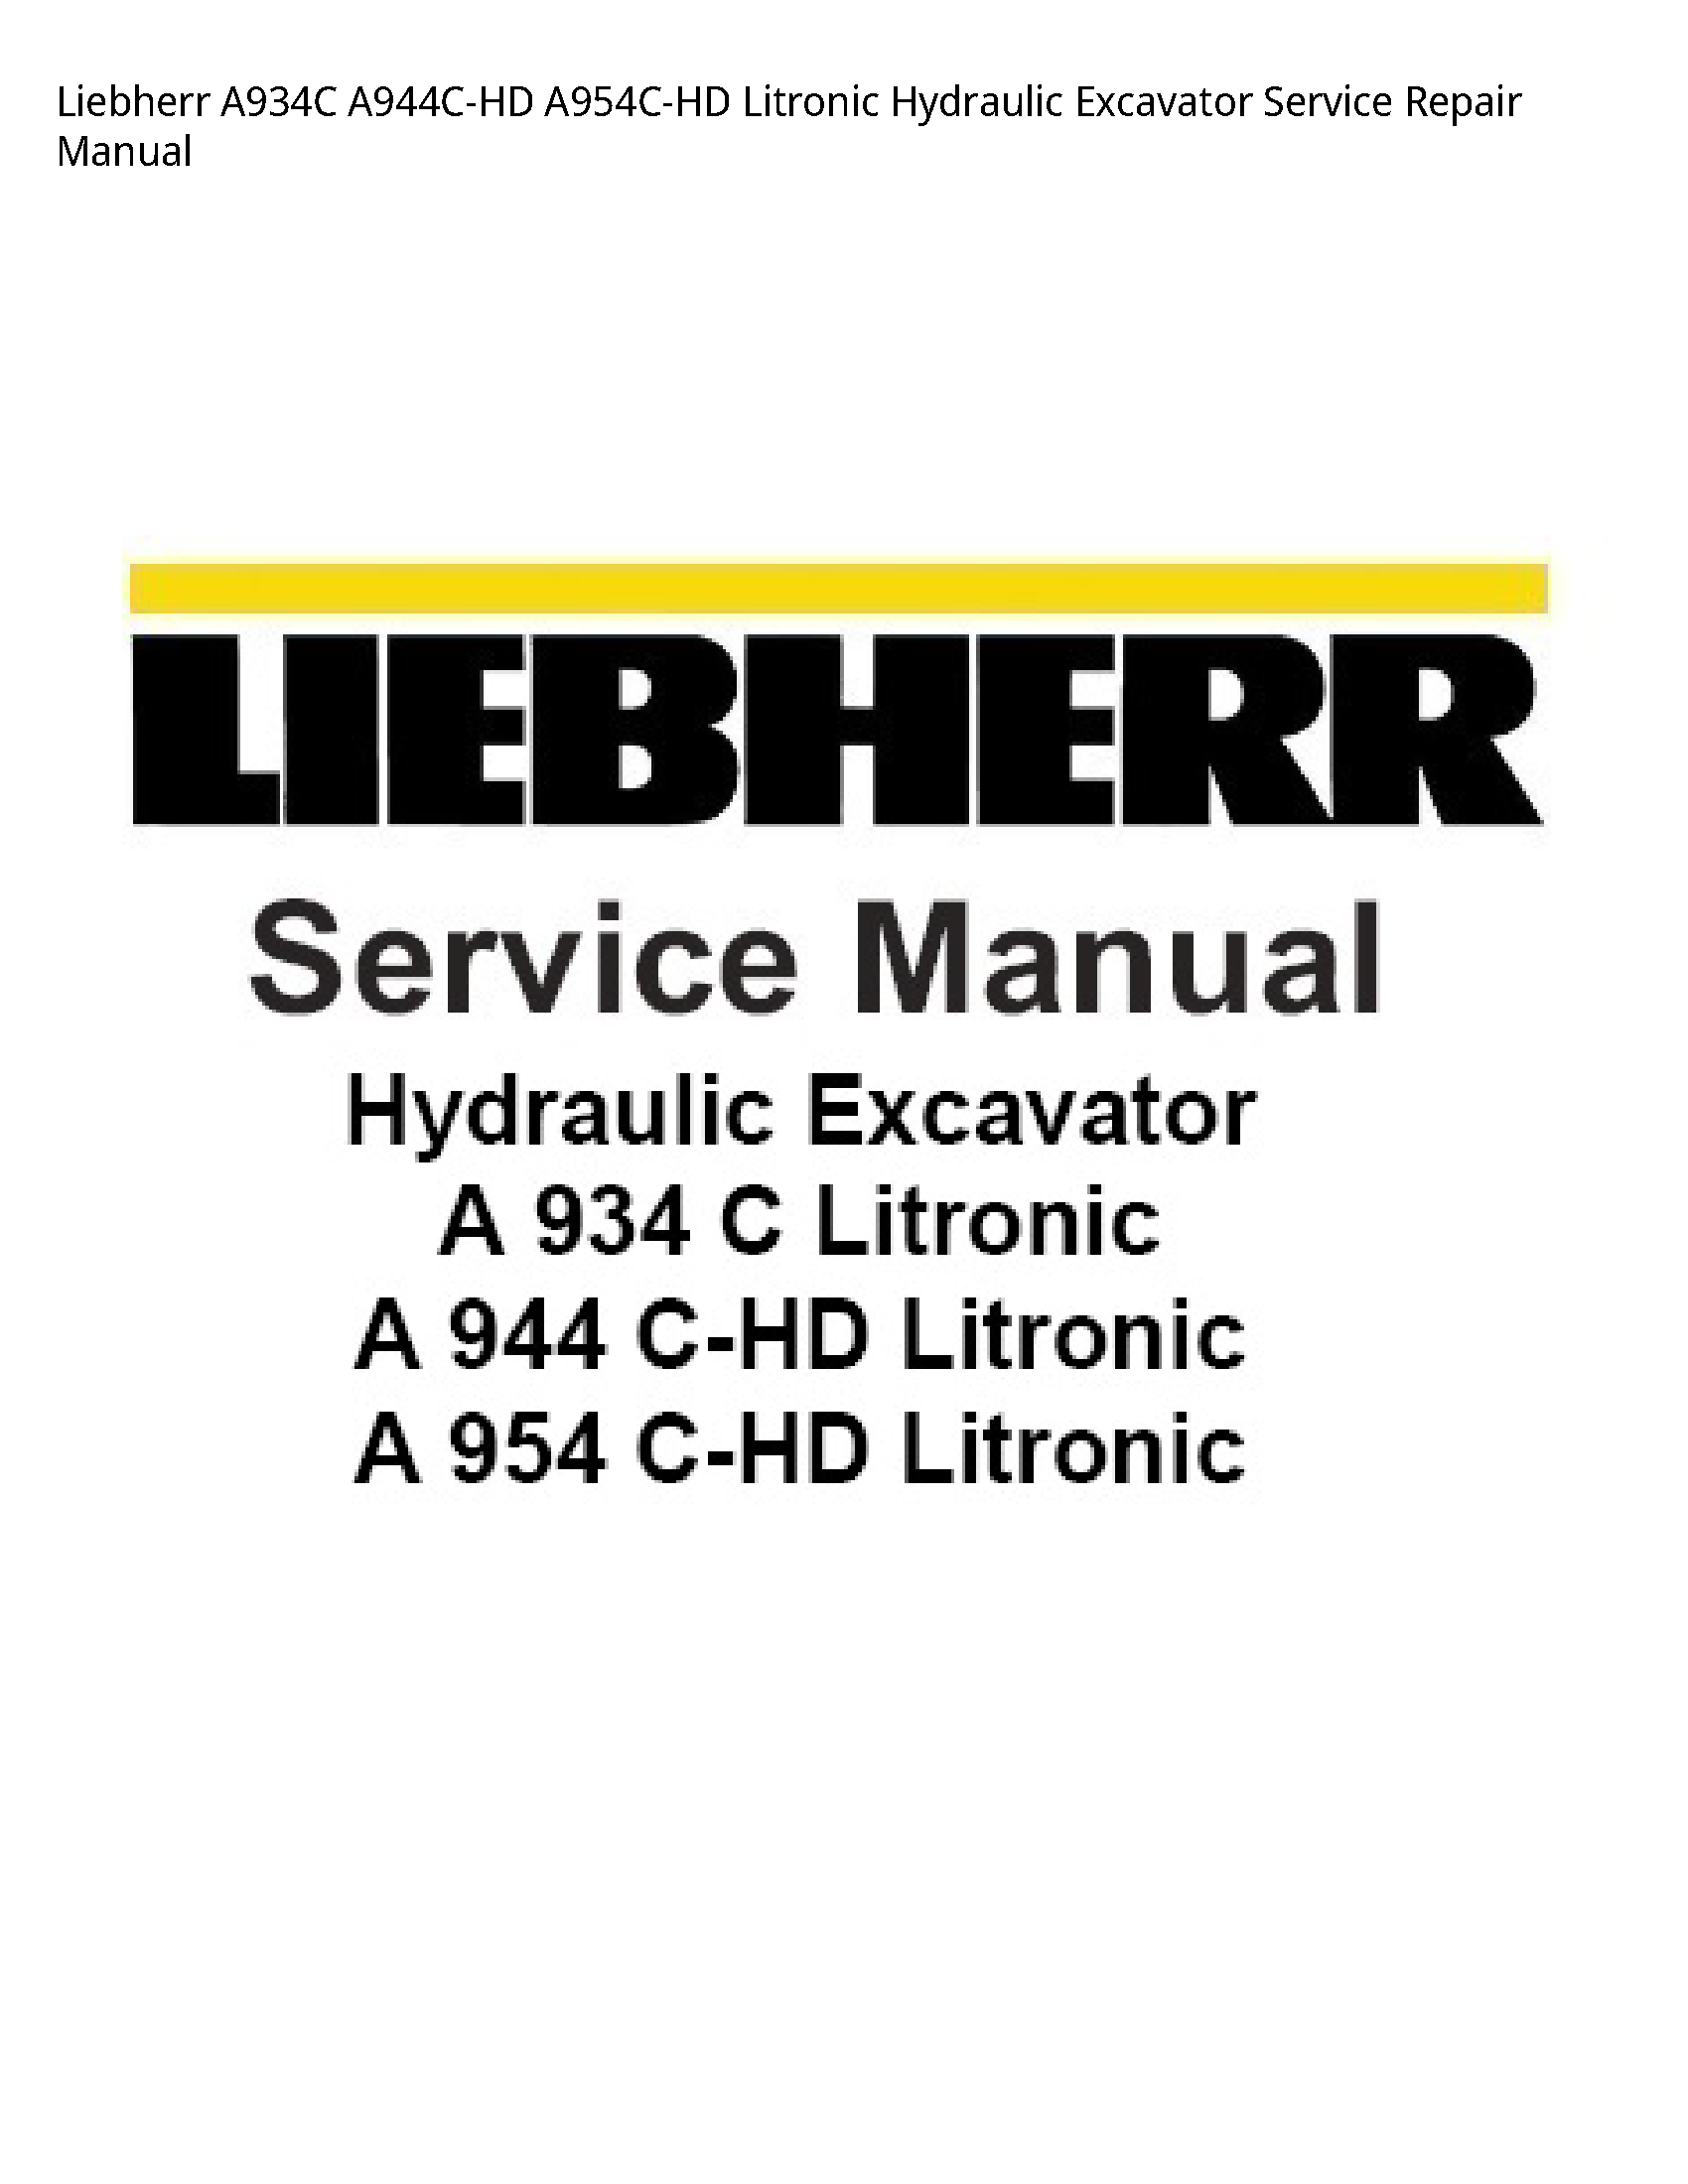 Liebherr A934C Litronic Hydraulic Excavator manual